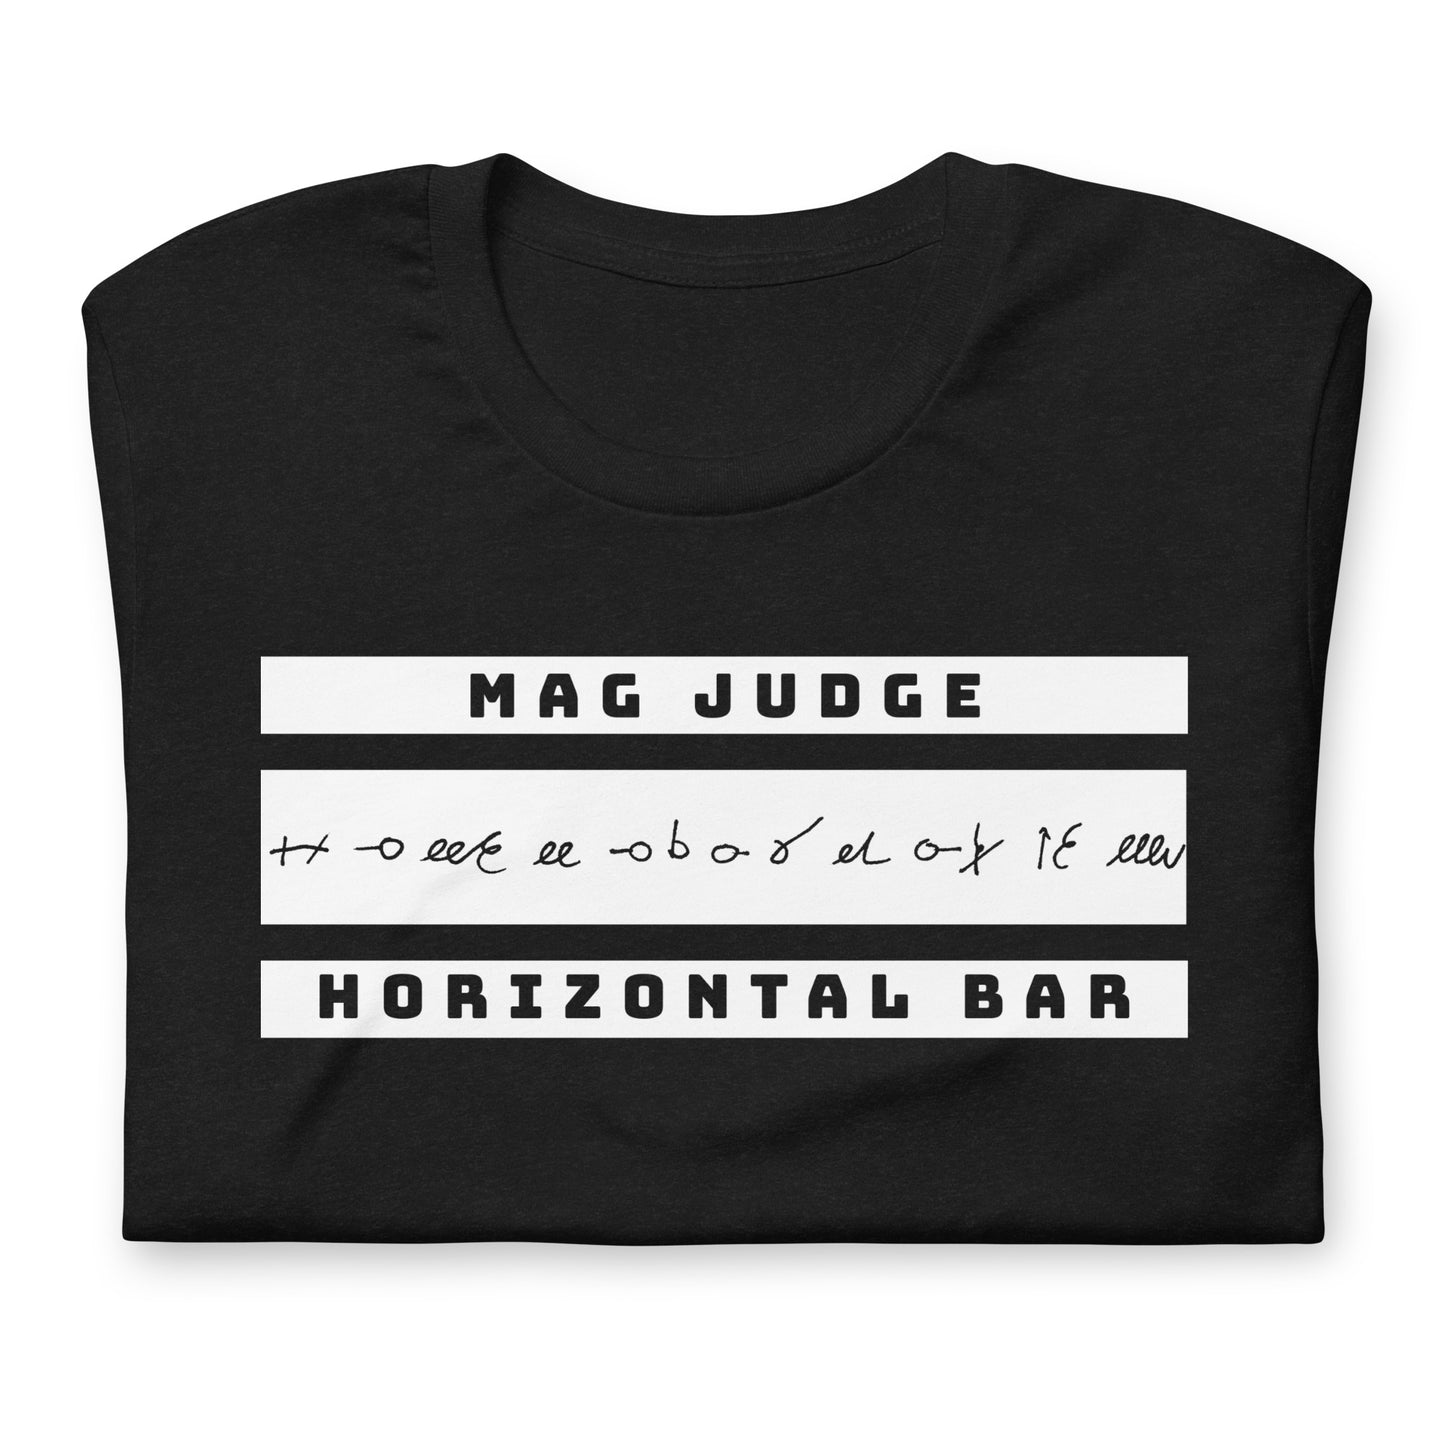 Jurylid Rek - Uniseks T-shirt